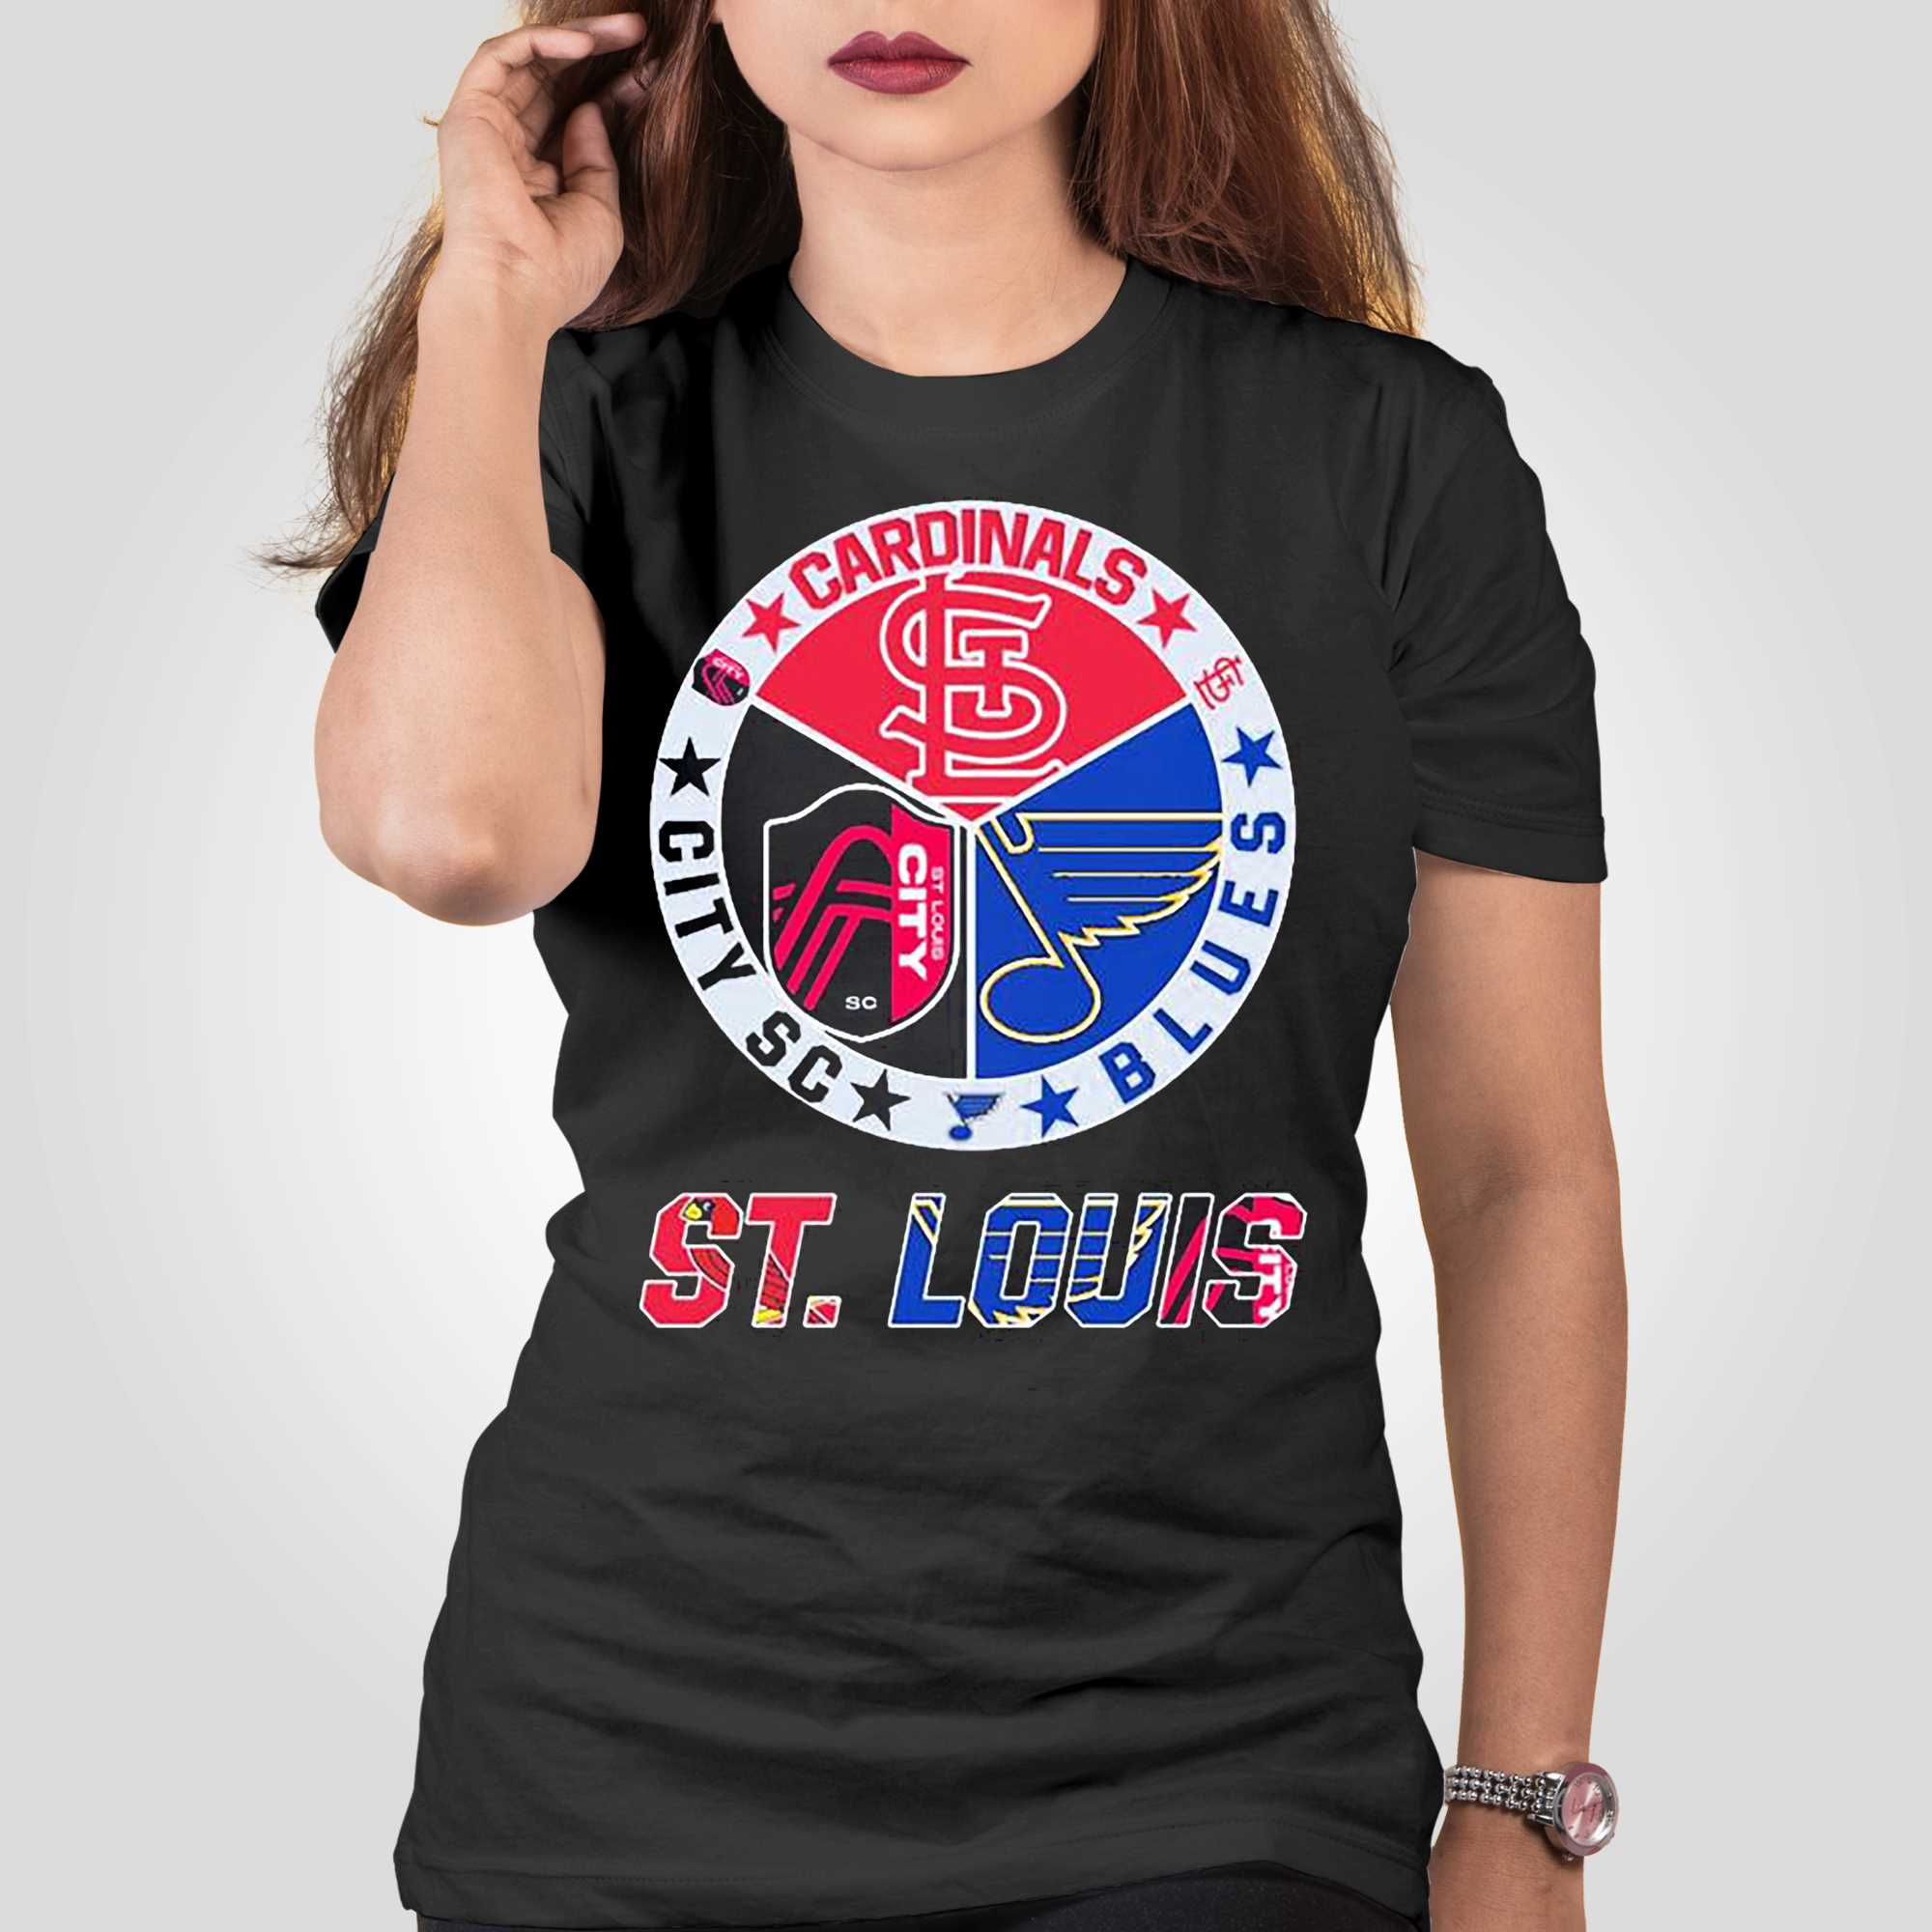 st louis cardinals and st louis blues shirt